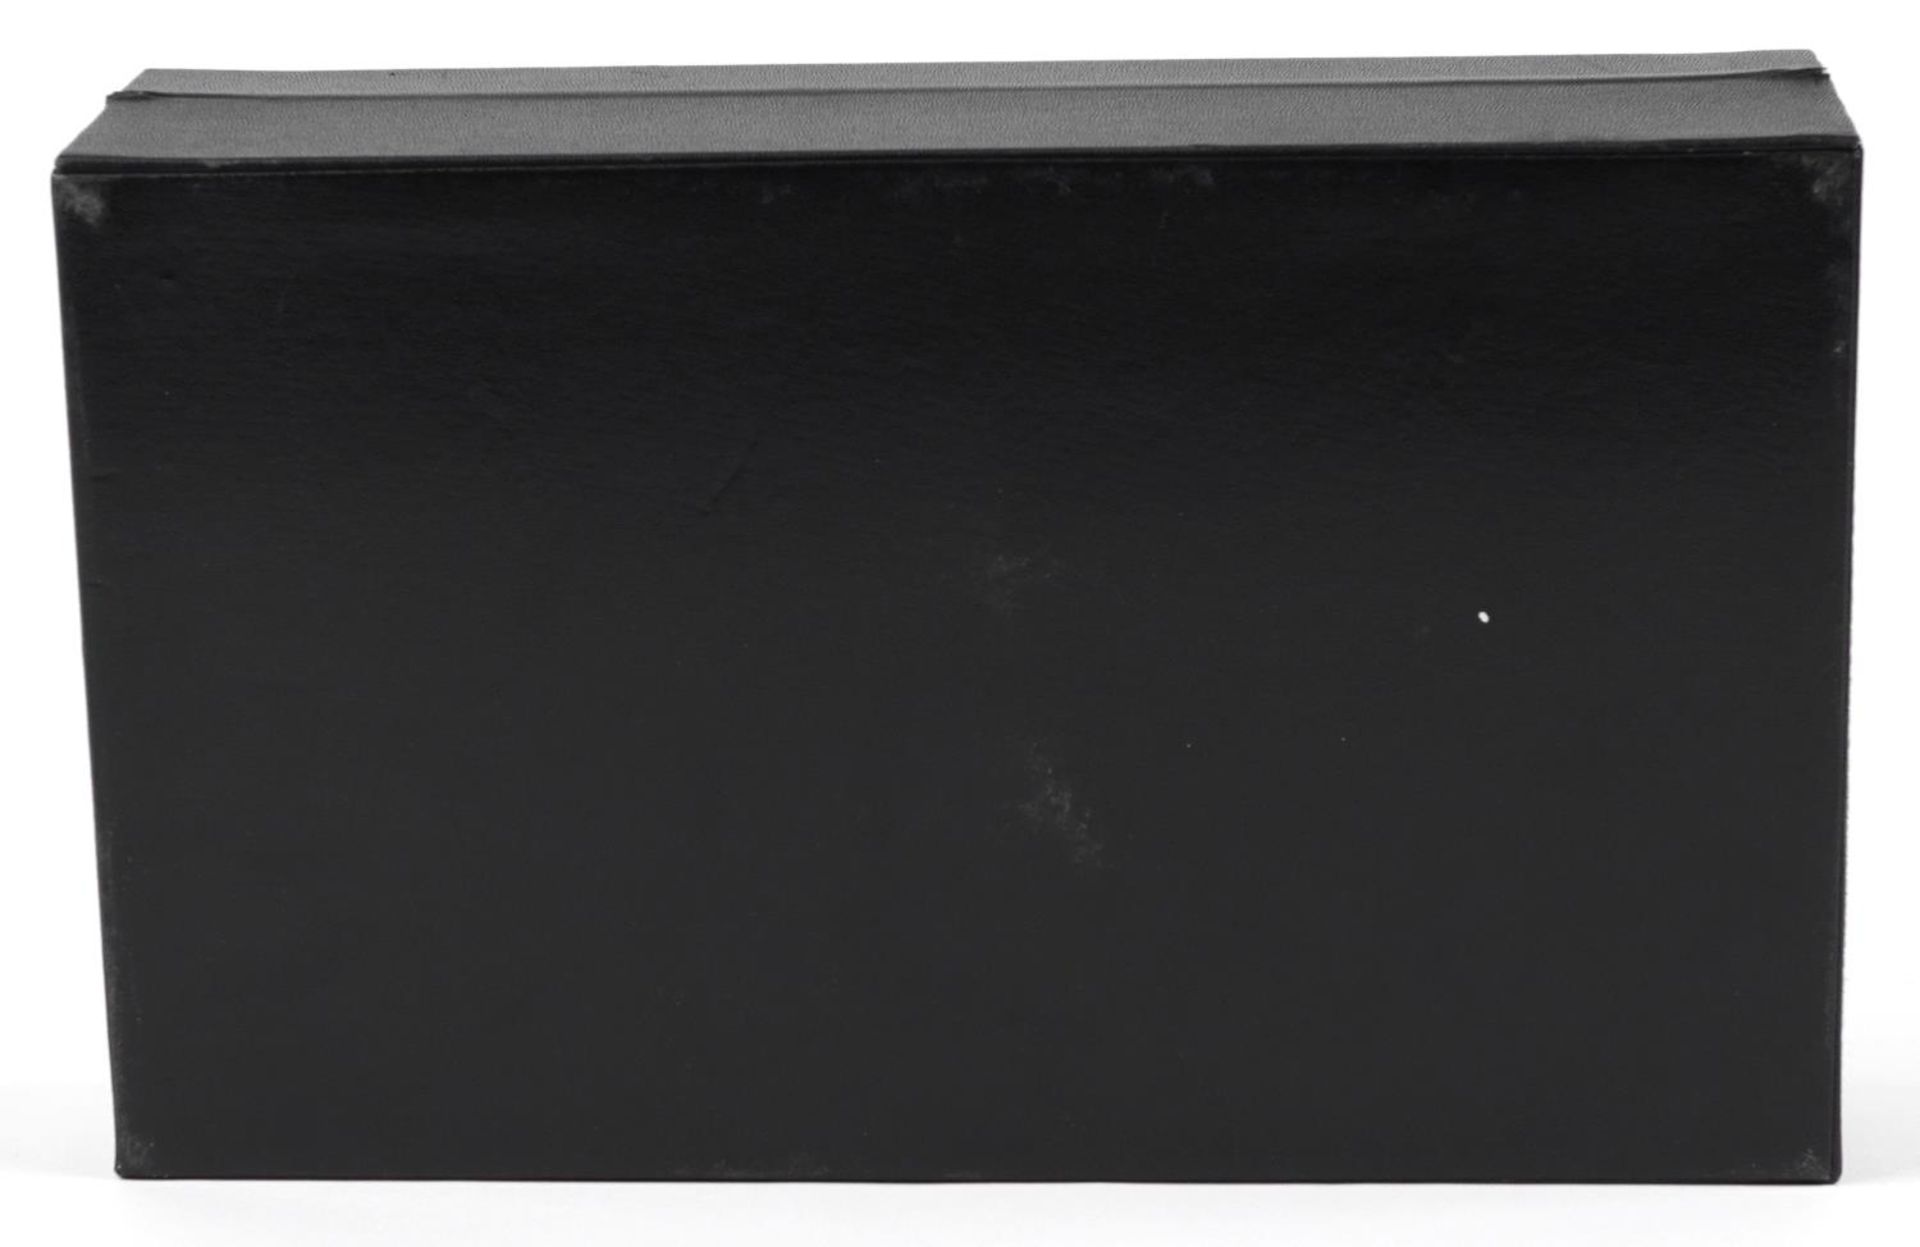 Black leatherette twelve section watch display box, 8.5cm H x 33cm W x 20cm D - Image 4 of 4